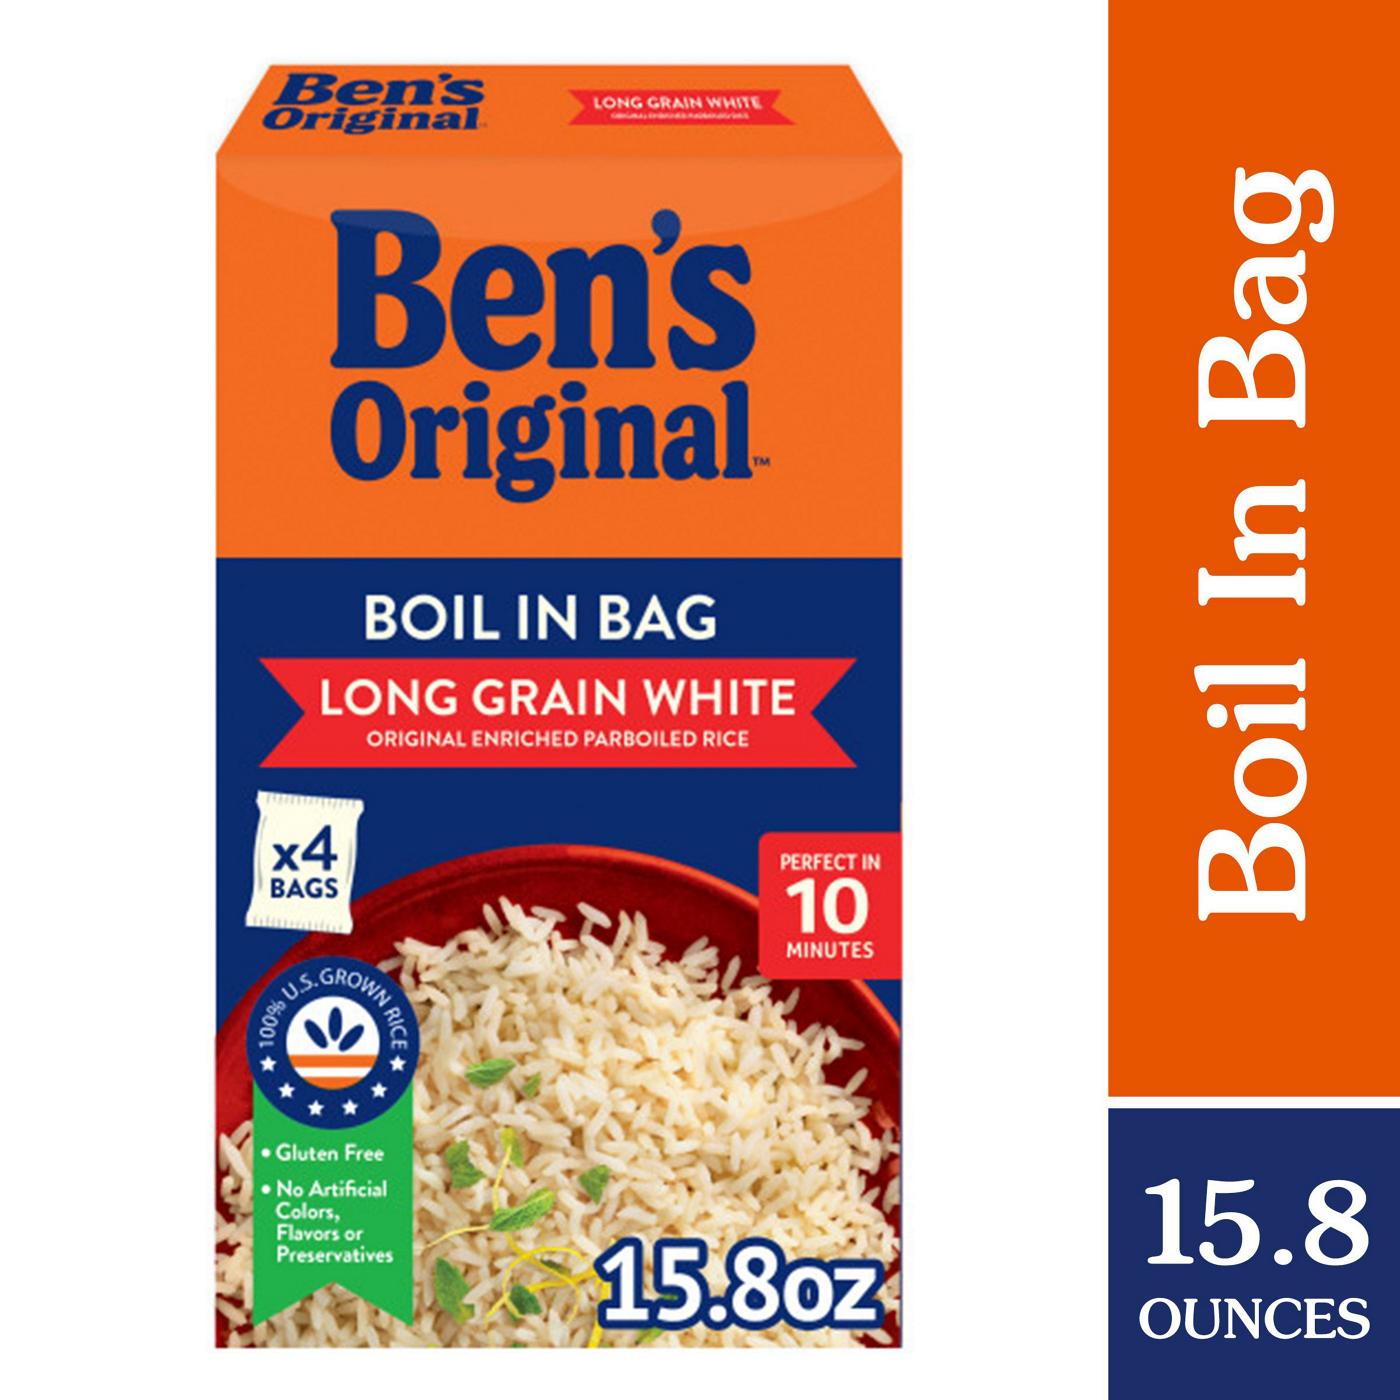 Ben's Original Enriched Parboiled Long Grain White Boil in Bag Rice; image 4 of 7